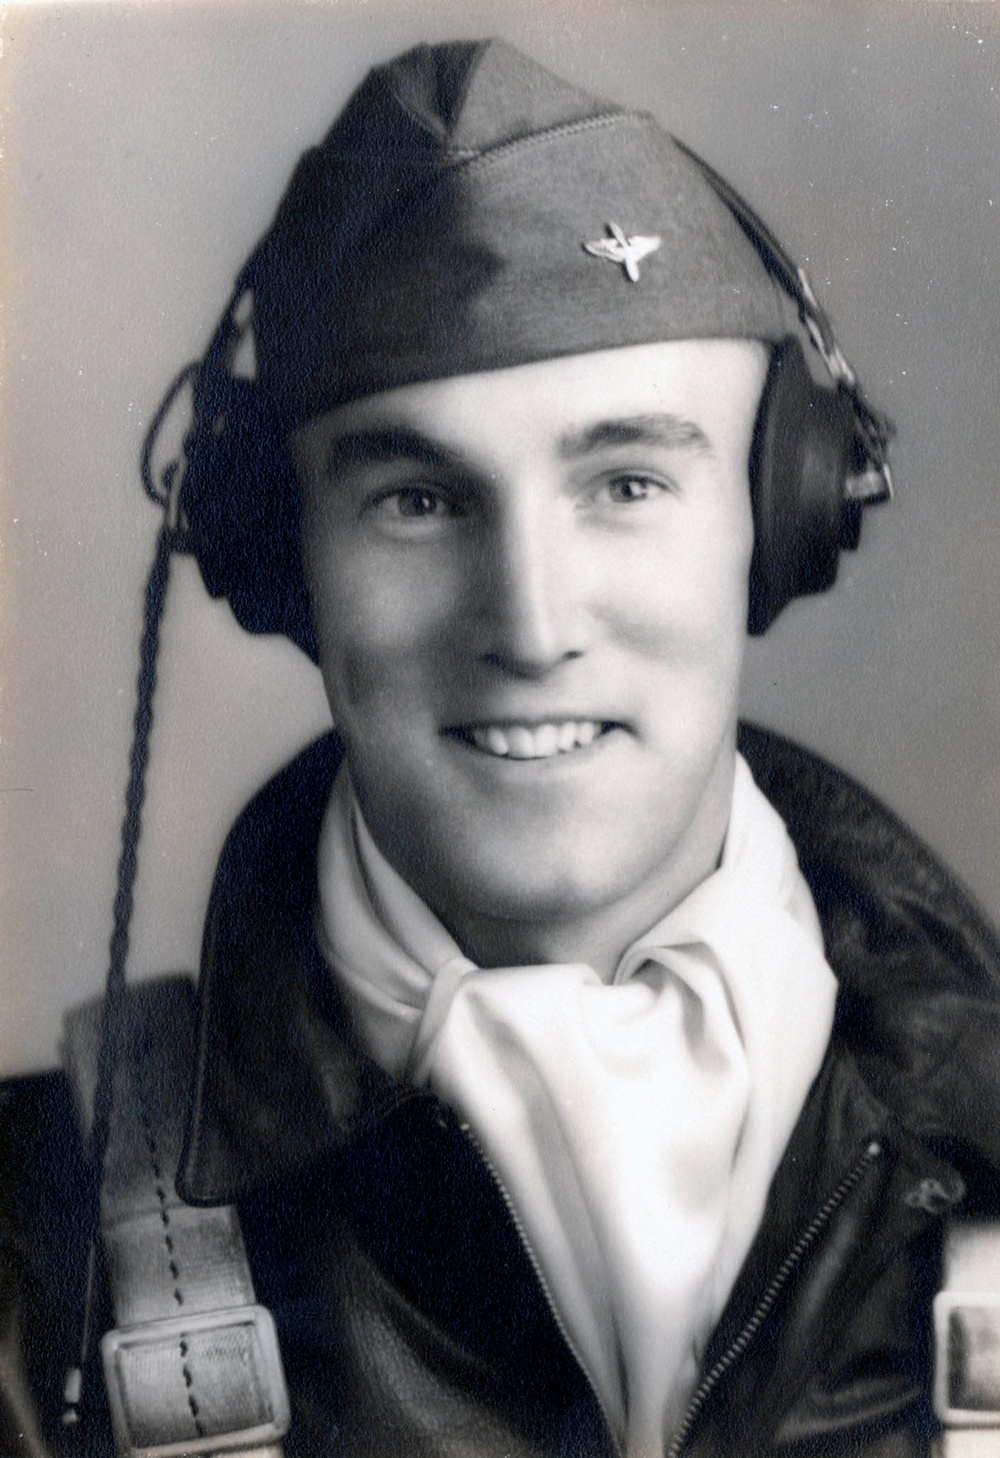 World War II veteran receives Distinguished Flying Cross in Pentagon ceremony